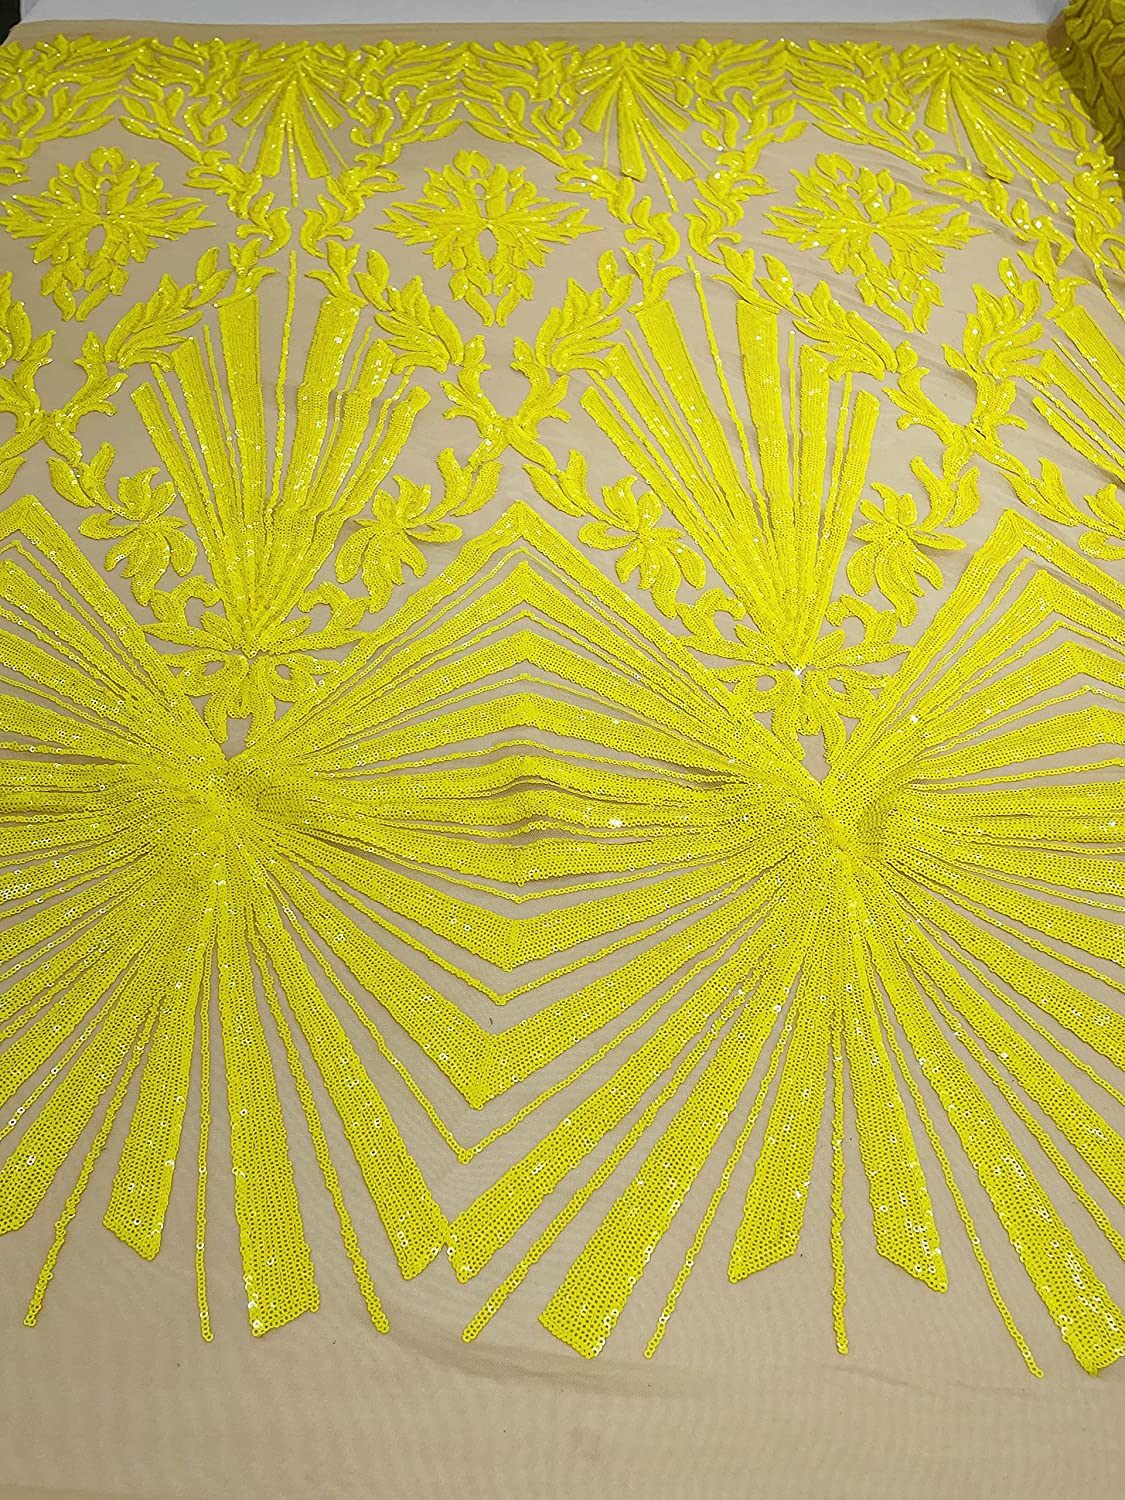 Diamond Damask Design On A Nude 4 Way Stretch Mesh/Prom Fabric (1 Yard, Yellow on Nude)